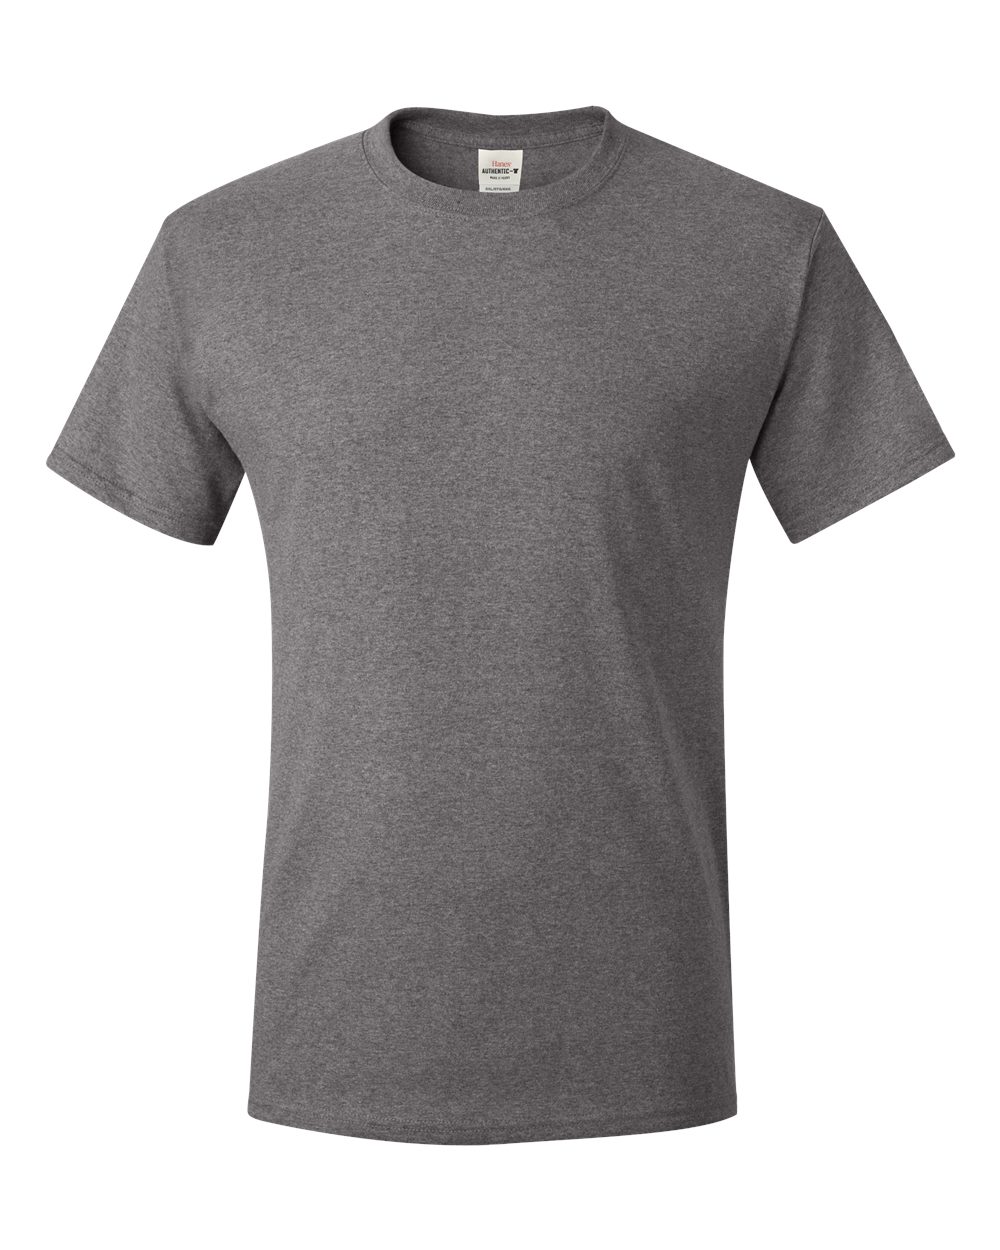 Hanes 5250 Authentic 100% Cotton T-Shirt - Fatigue Green